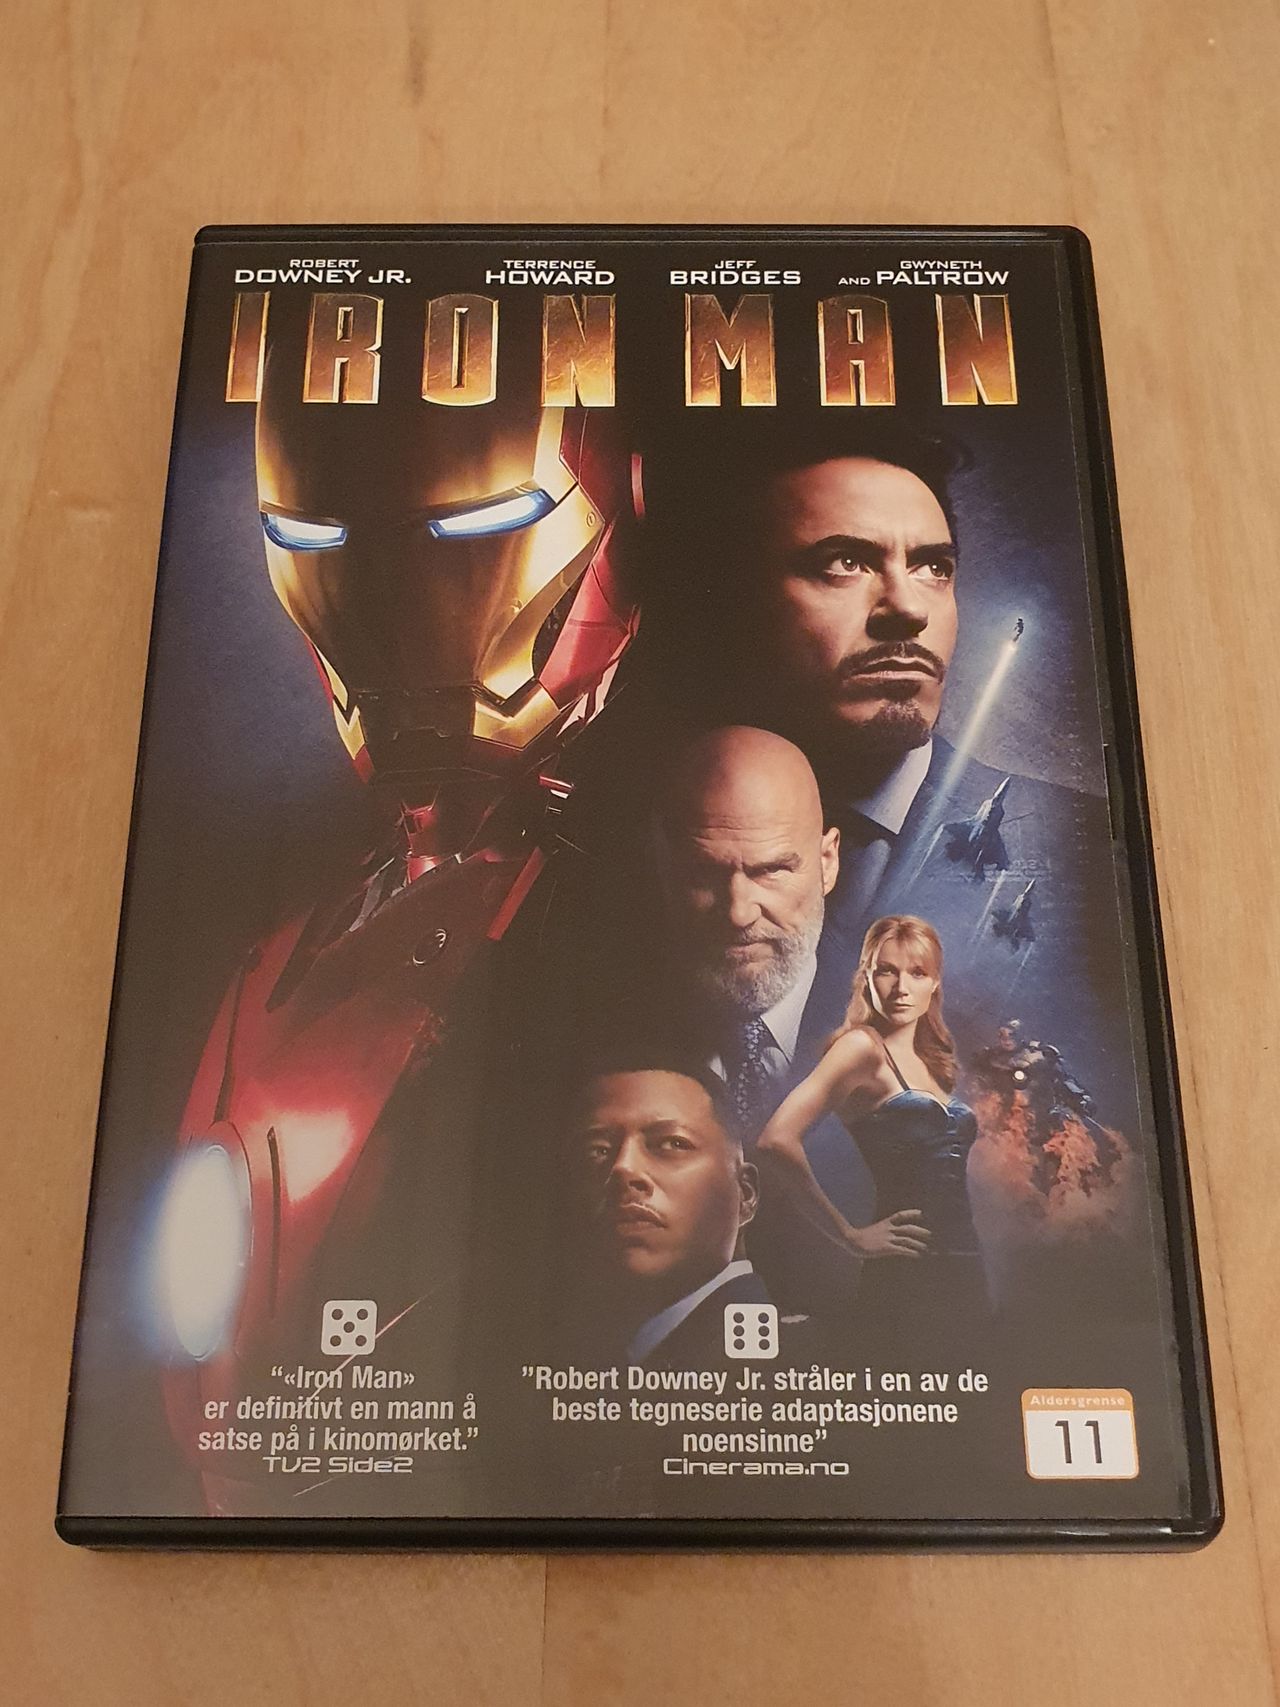 iron man dvd cover